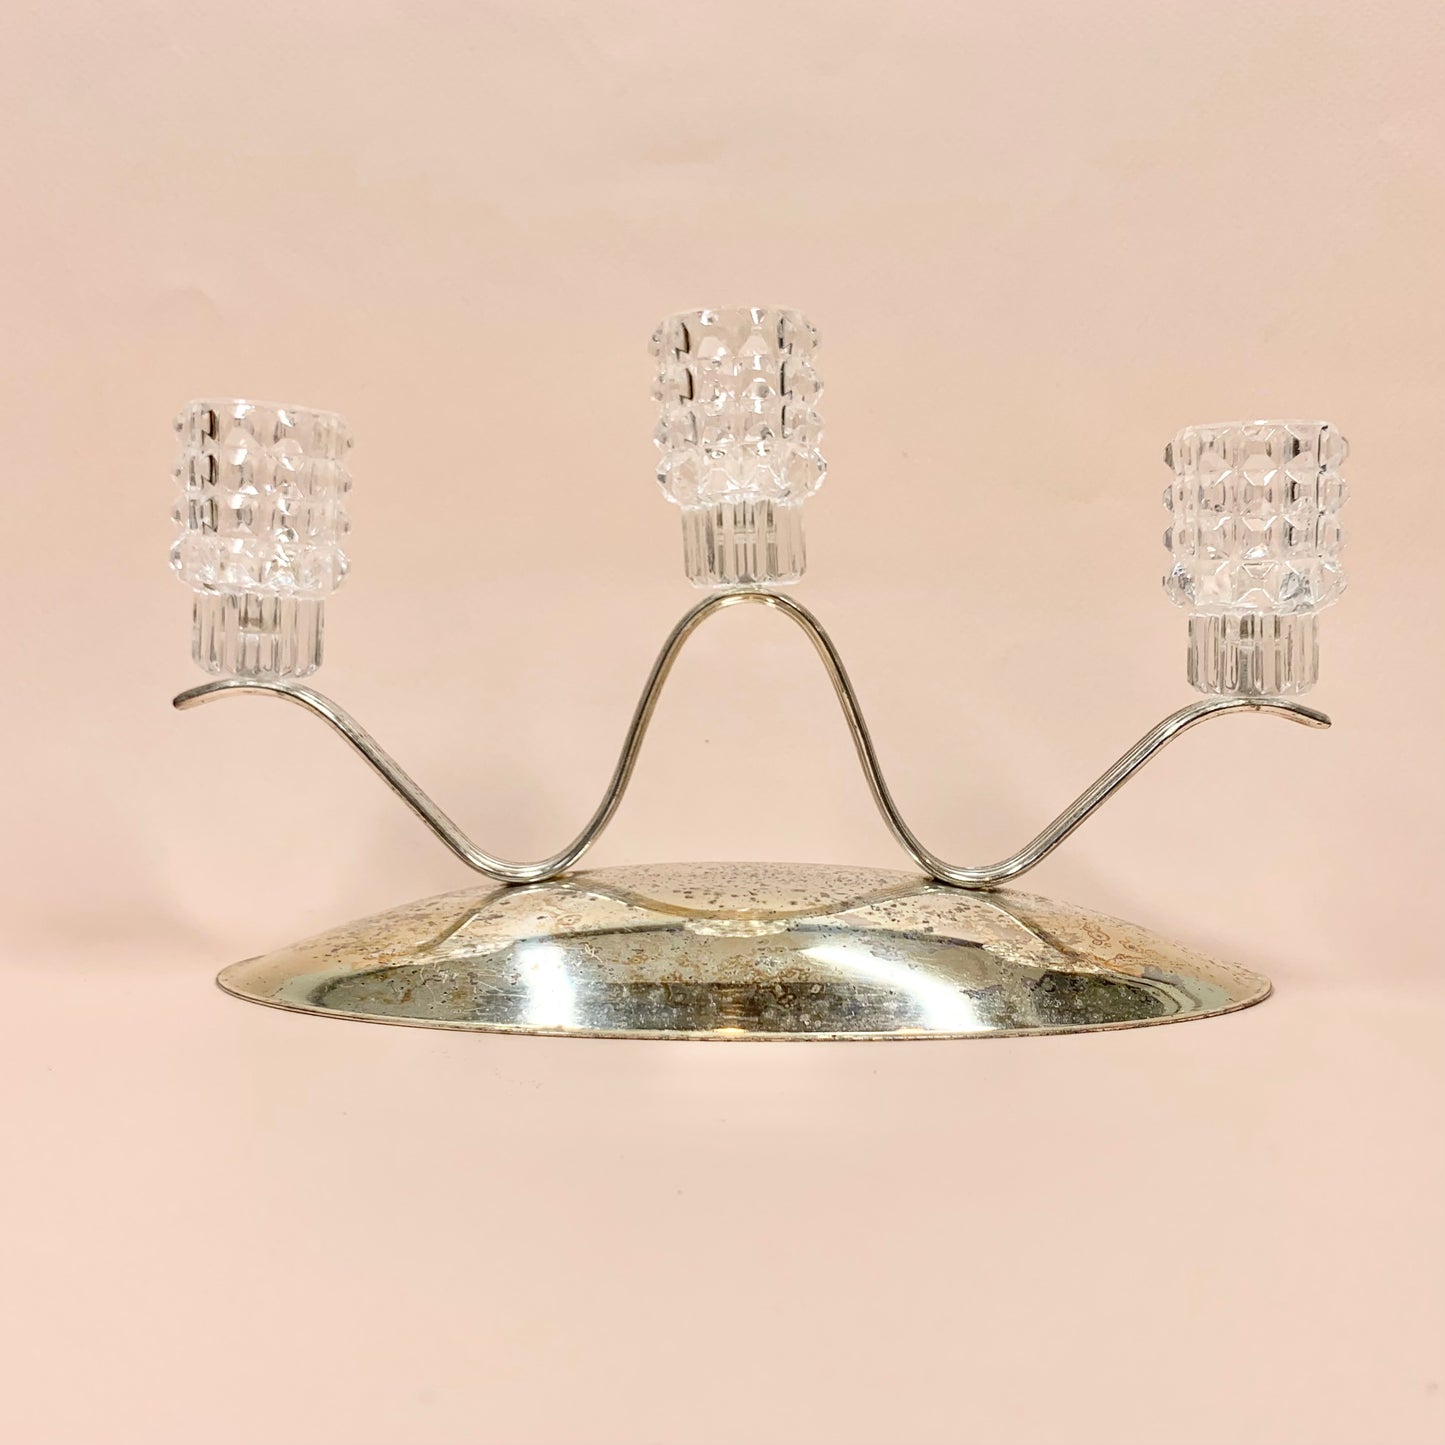 Vintage West German silver plated and cut crystal candelabra